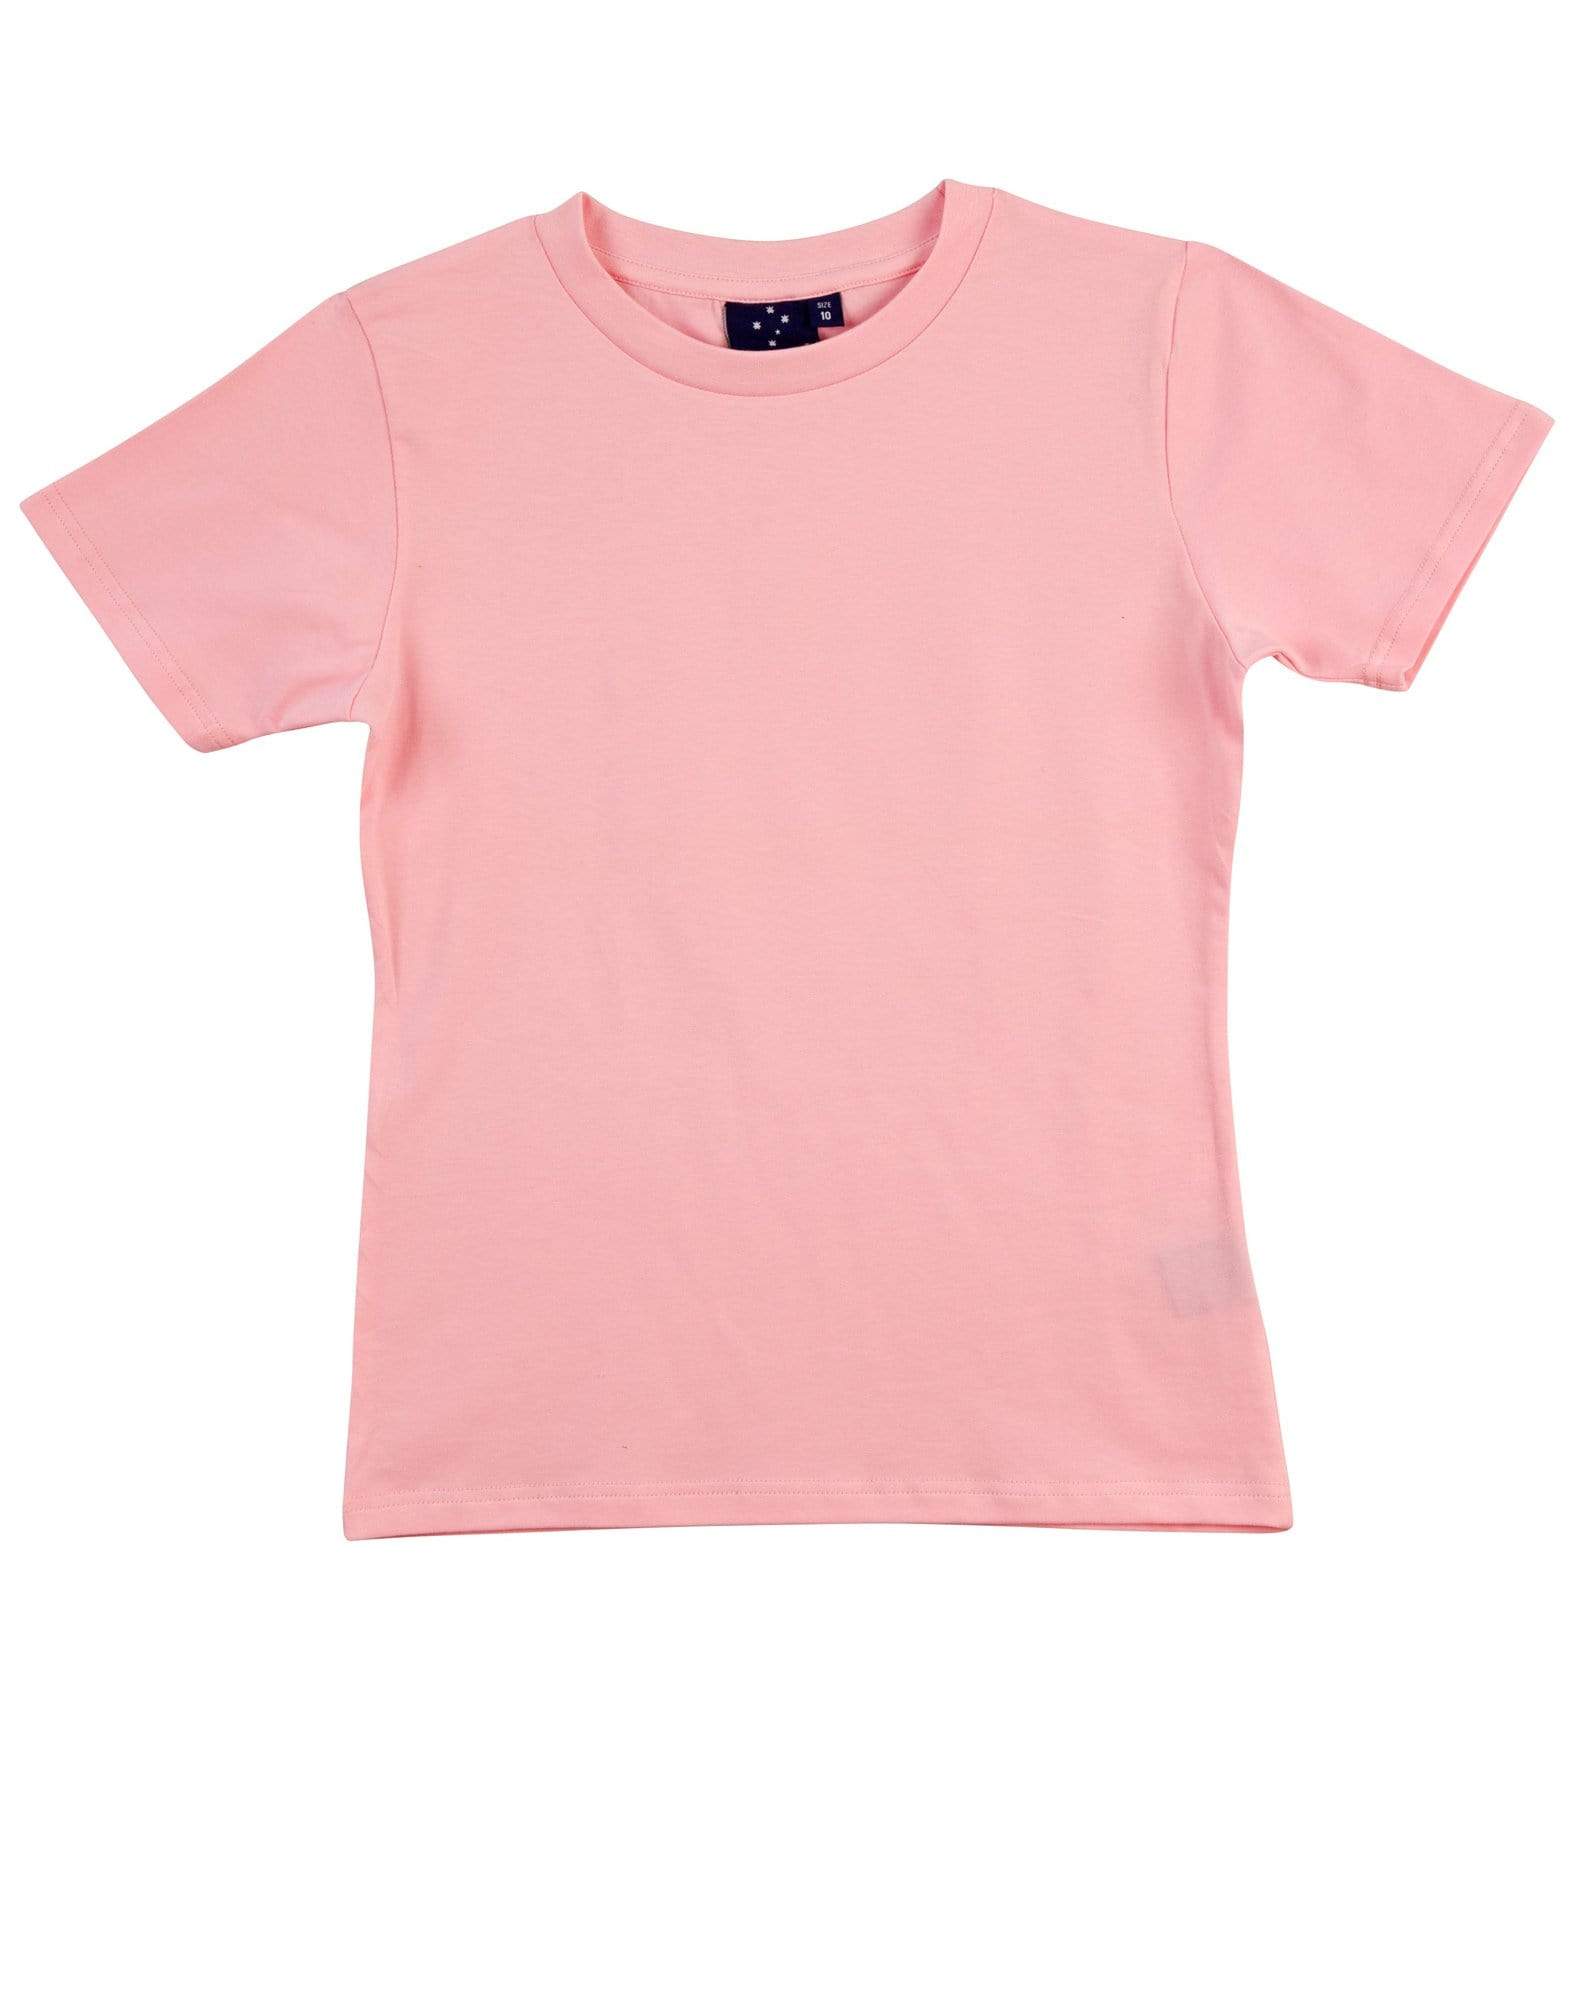 Superfit Tee Shirt Ladies' Ts15 Casual Wear Winning Spirit Light Pink 8 